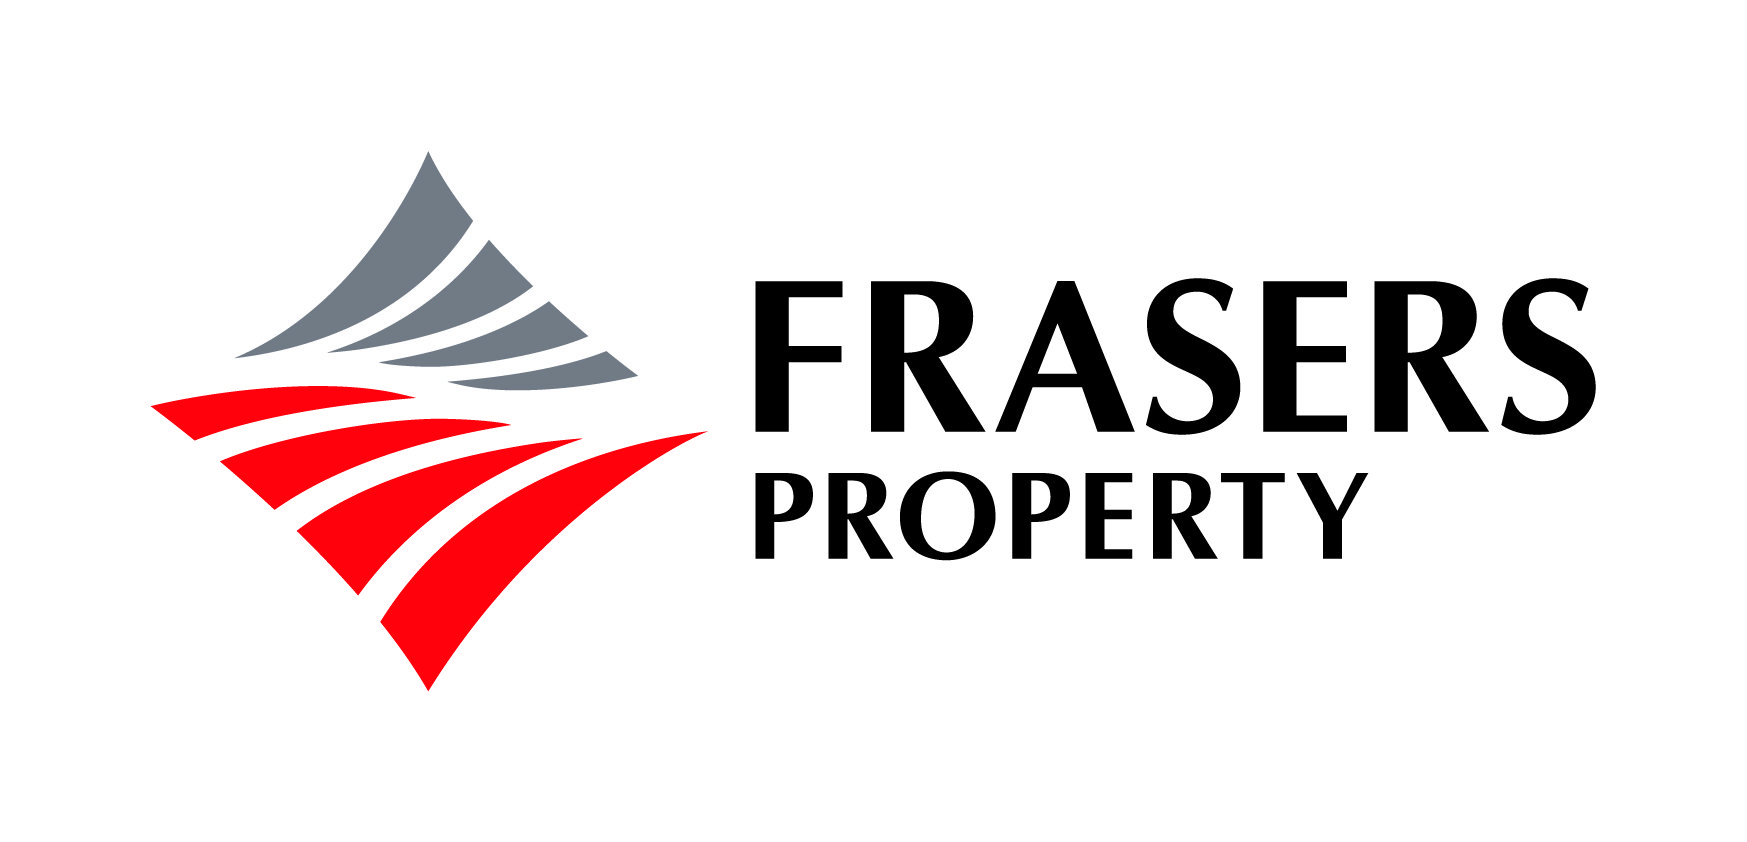 Frasers Property Vietnam